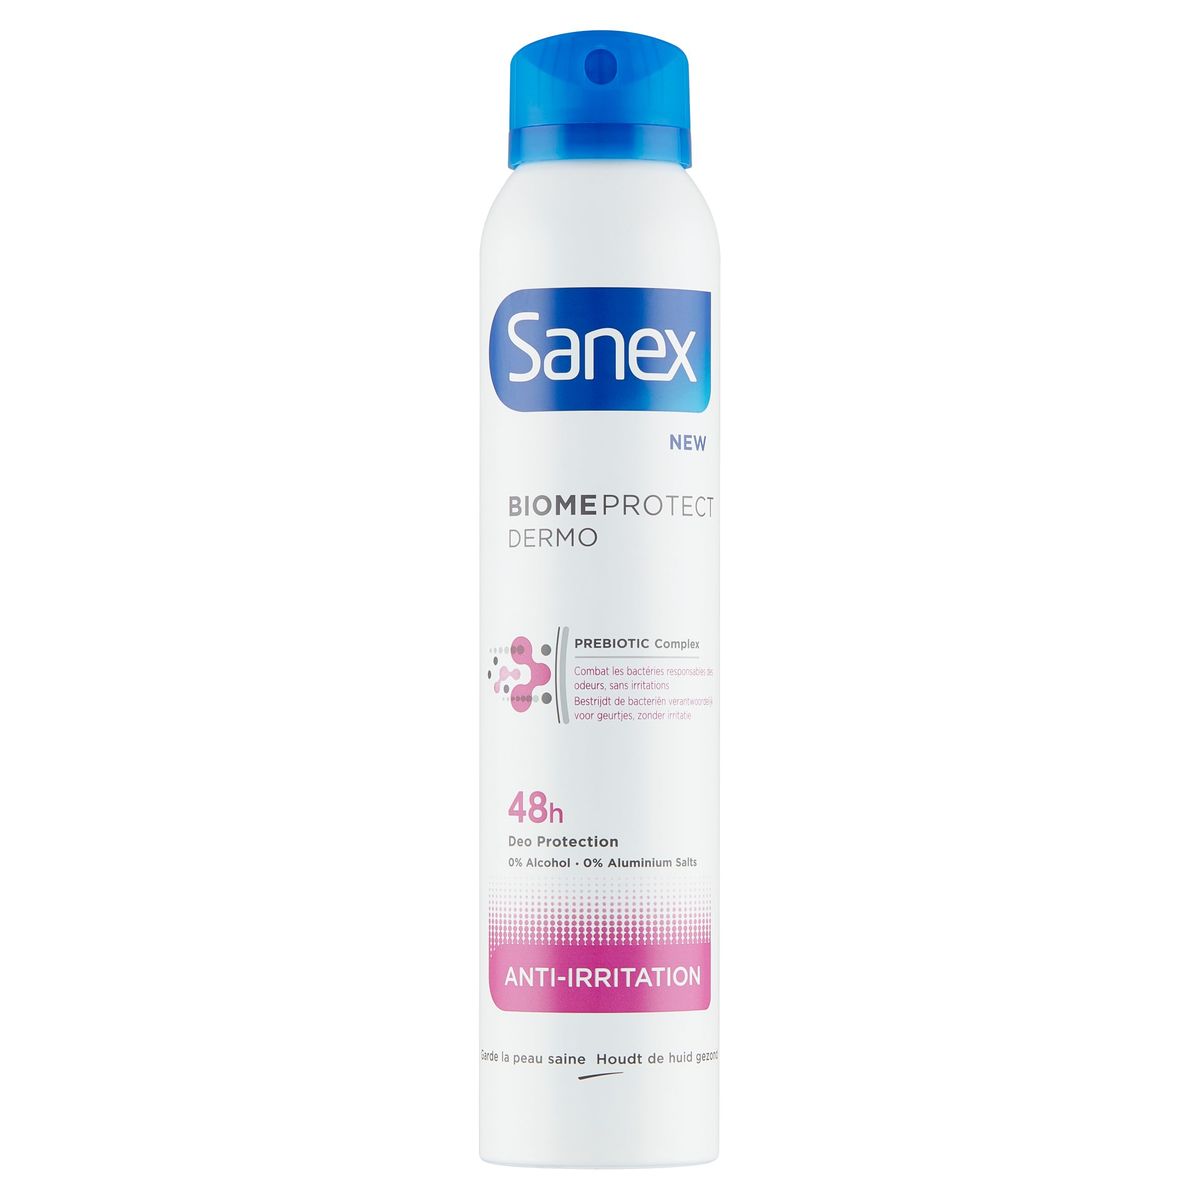 Sanex spray Biomeprotect Dermo Anti-irritation 200ml